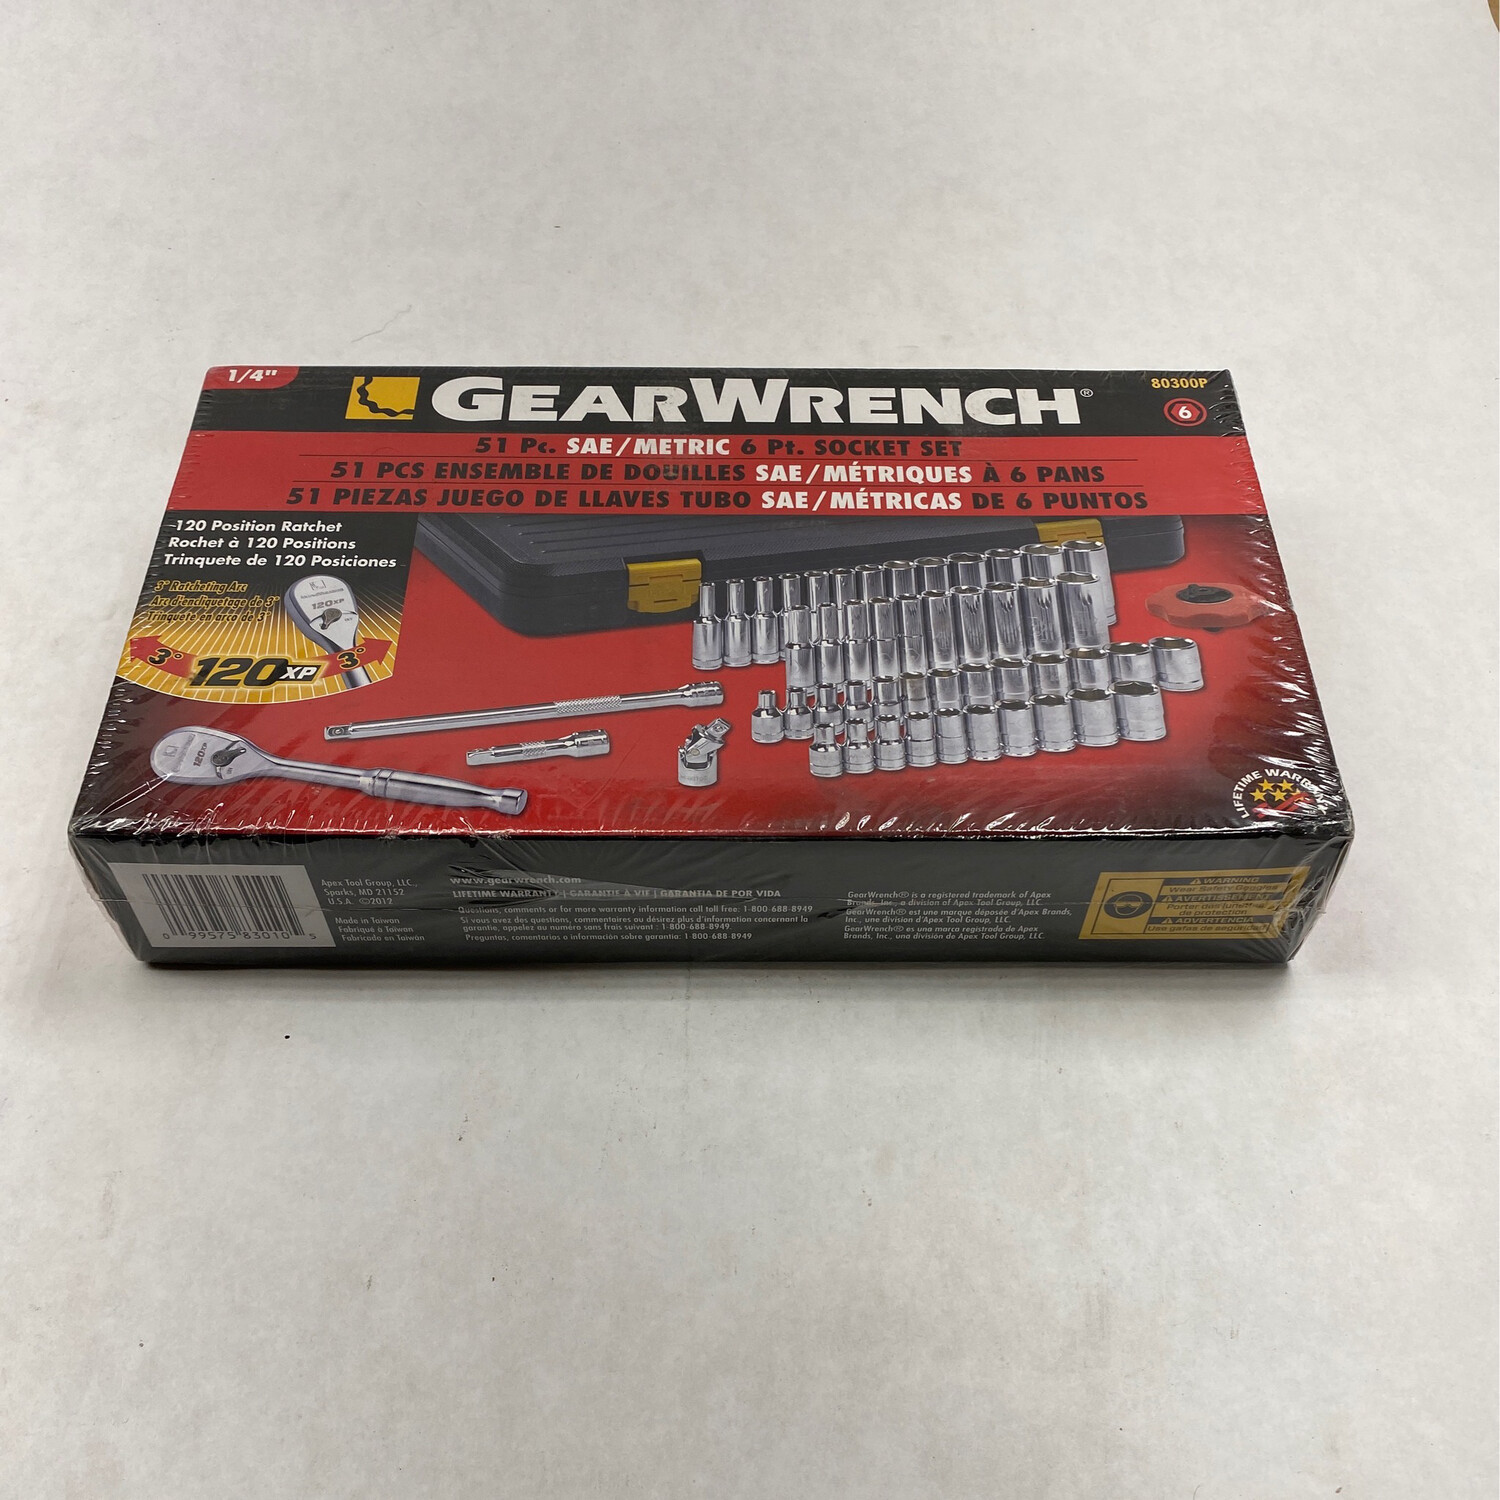 Gearwrench 51pc. 1/4” Drive SAE/Metric 6 Pt. Socket Set, 80300P